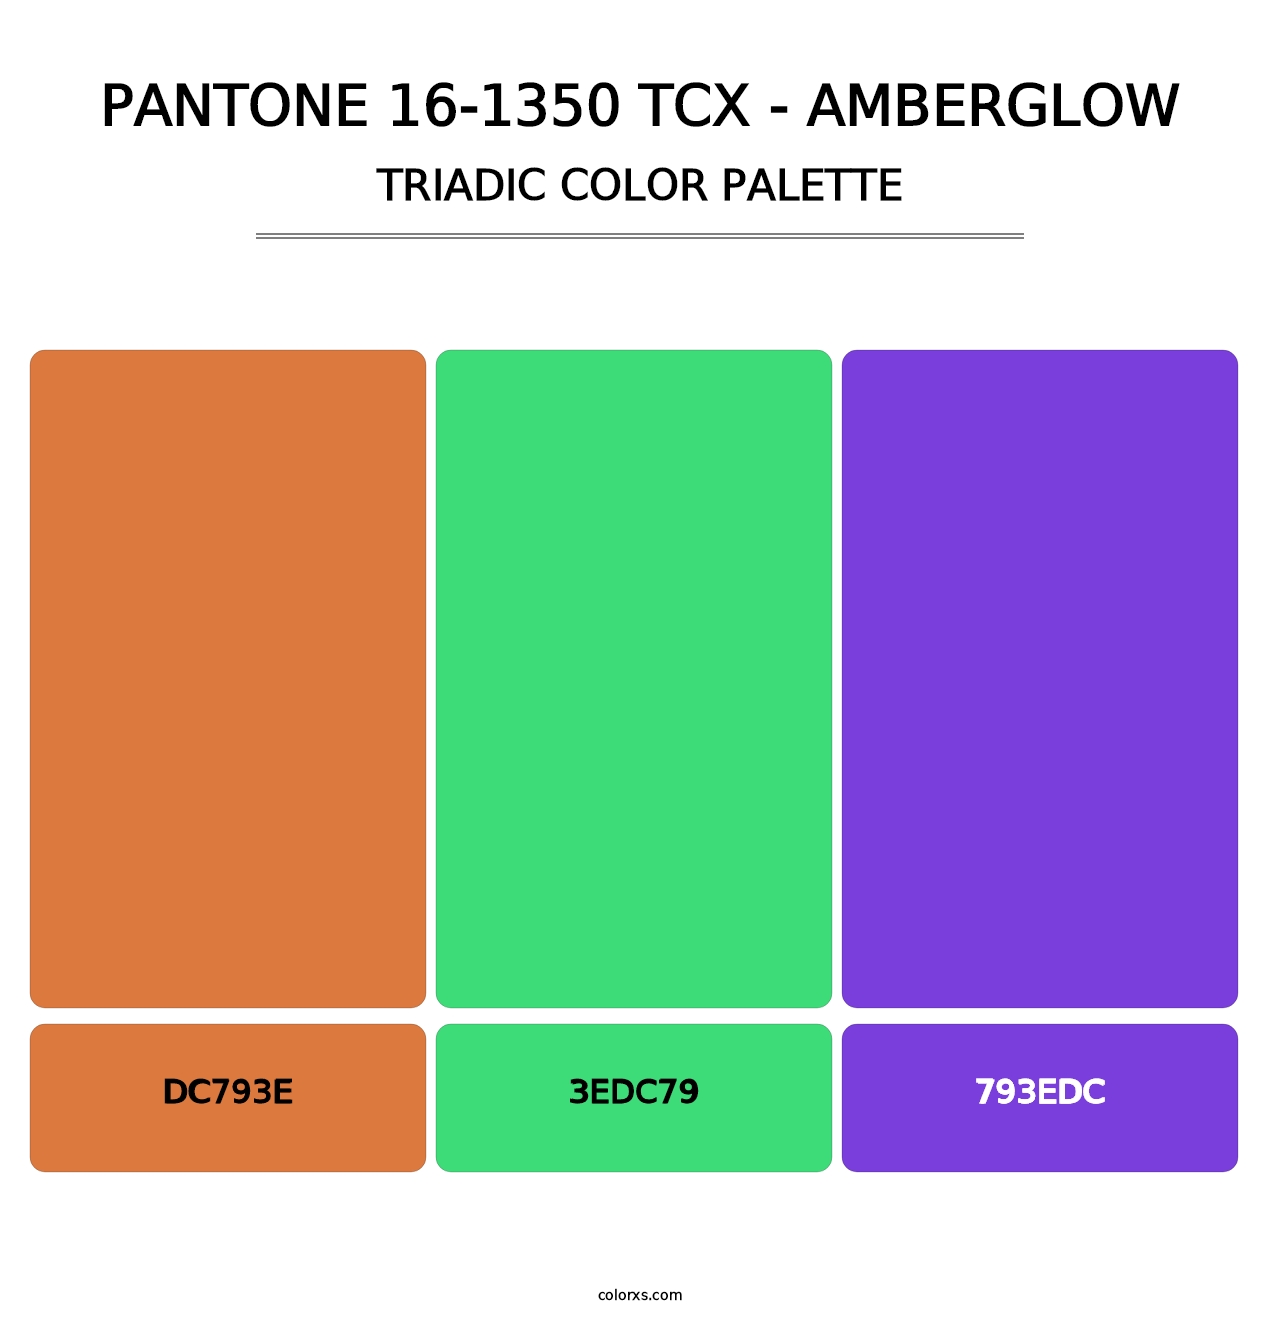 PANTONE 16-1350 TCX - Amberglow - Triadic Color Palette